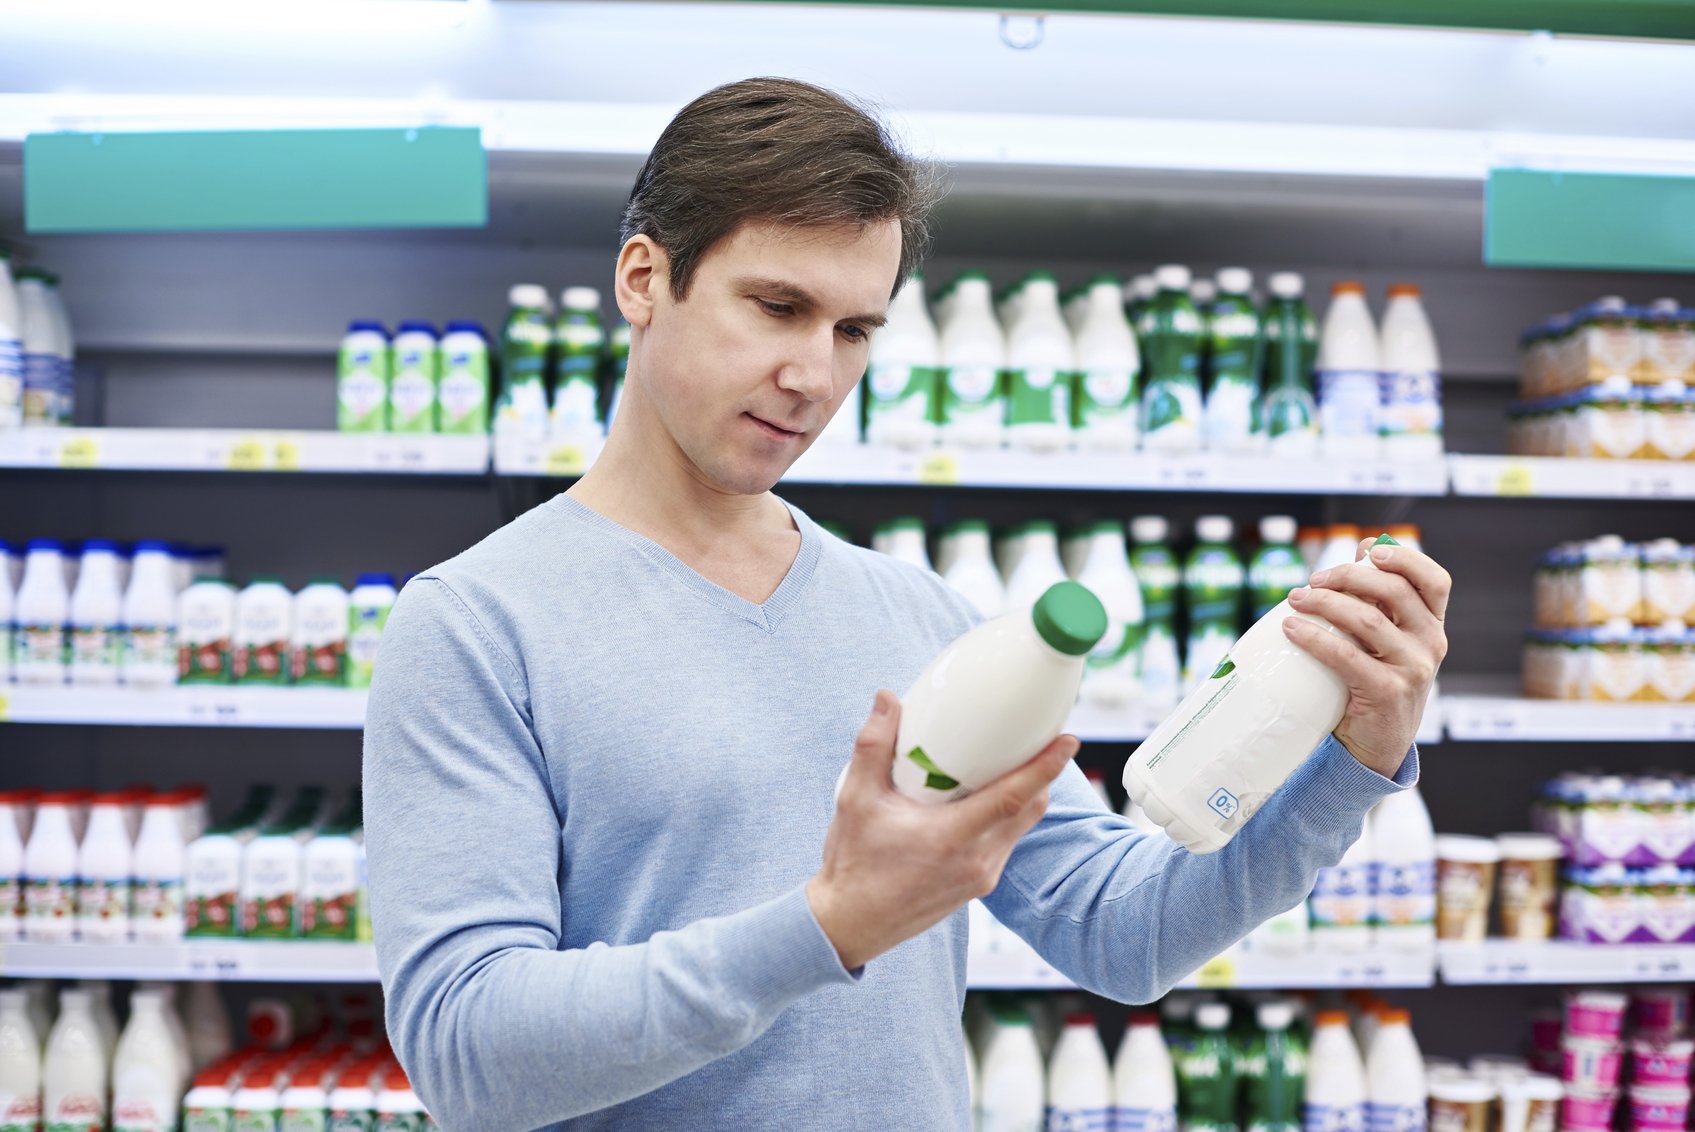 Does skim milk have more sugar than full